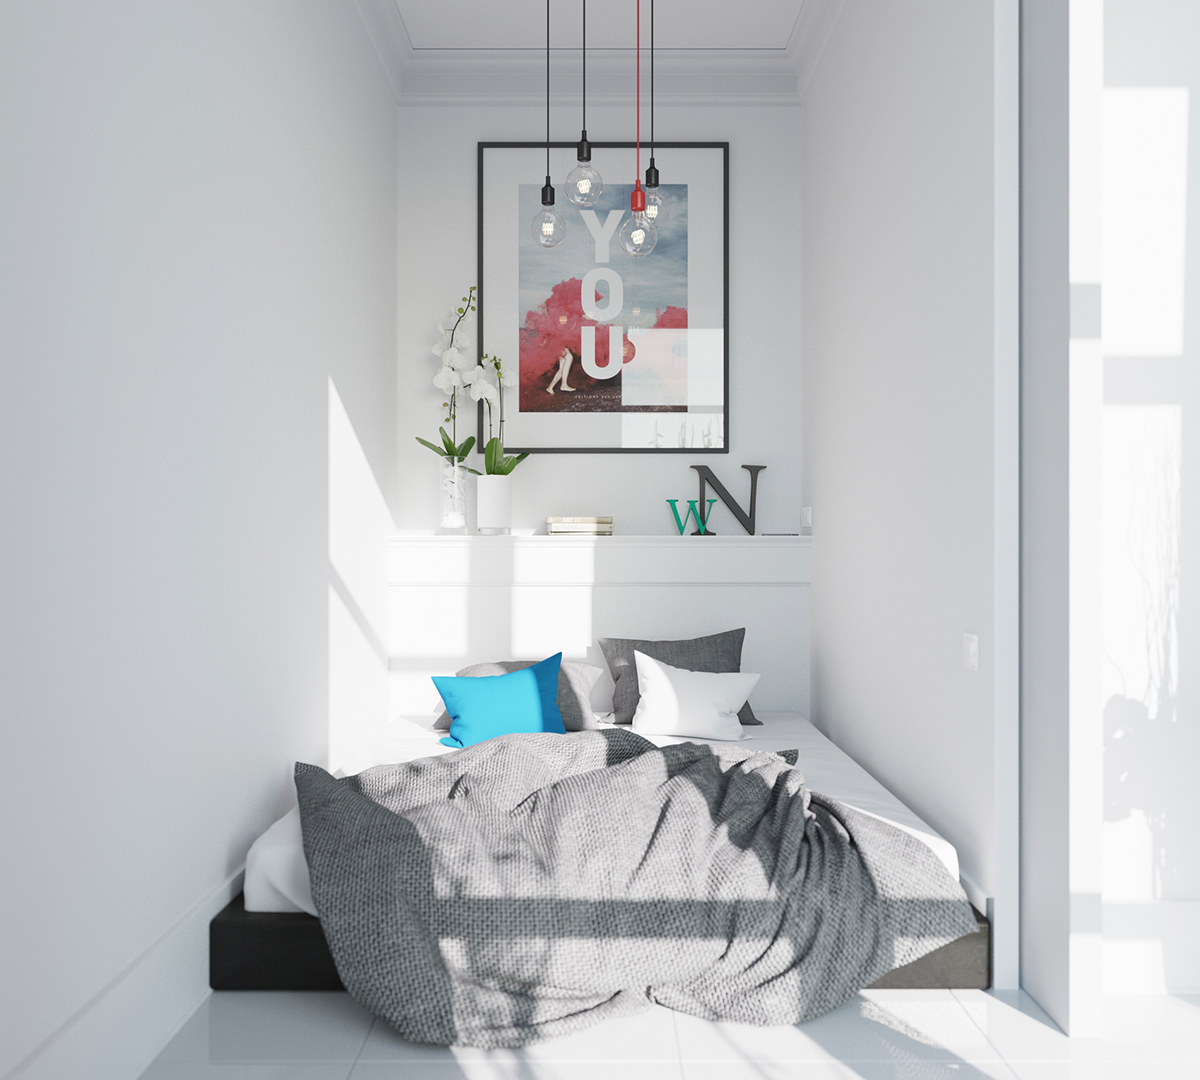 Design ideas for Scandinavian bedrooms "width =" 1200 "height =" 1080 "srcset =" https://mileray.com/wp-content/uploads/2020/05/1588509503_203_Scandinavian-Bedroom-Decor-Ideas-With-Perfect-and-White-Color-Design.jpg 1200w, https: / /mileray.com/wp-content/uploads/2016/09/Artem-Bobrov-Андрусь-Bezdar-300x270.jpg 300w, https://mileray.com/wp-content/uploads/2016/09/Artem-Bobrov- Андрусь-Bezdar-768x691.jpg 768w, https://mileray.com/wp-content/uploads/2016/09/Artem-Bobrov-Андрусь-Bezdar-1024x922.jpg 1024w, https://mileray.com/wp- content / uploads / 2016/09 / Artem-Bobrov-Андрусь-Bezdar-696x626.jpg 696w, https://mileray.com/wp-content/uploads/2016/09/Artem-Bobrov-Андрусу-Bezdar-1068x961.jpg 1068w, https://mileray.com/wp-content/uploads/2016/09/Artem-Bobrov-Андрусь-Bezdar-467x420.jpg 467w "sizes =" (maximum width: 1200px) 100vw, 1200px